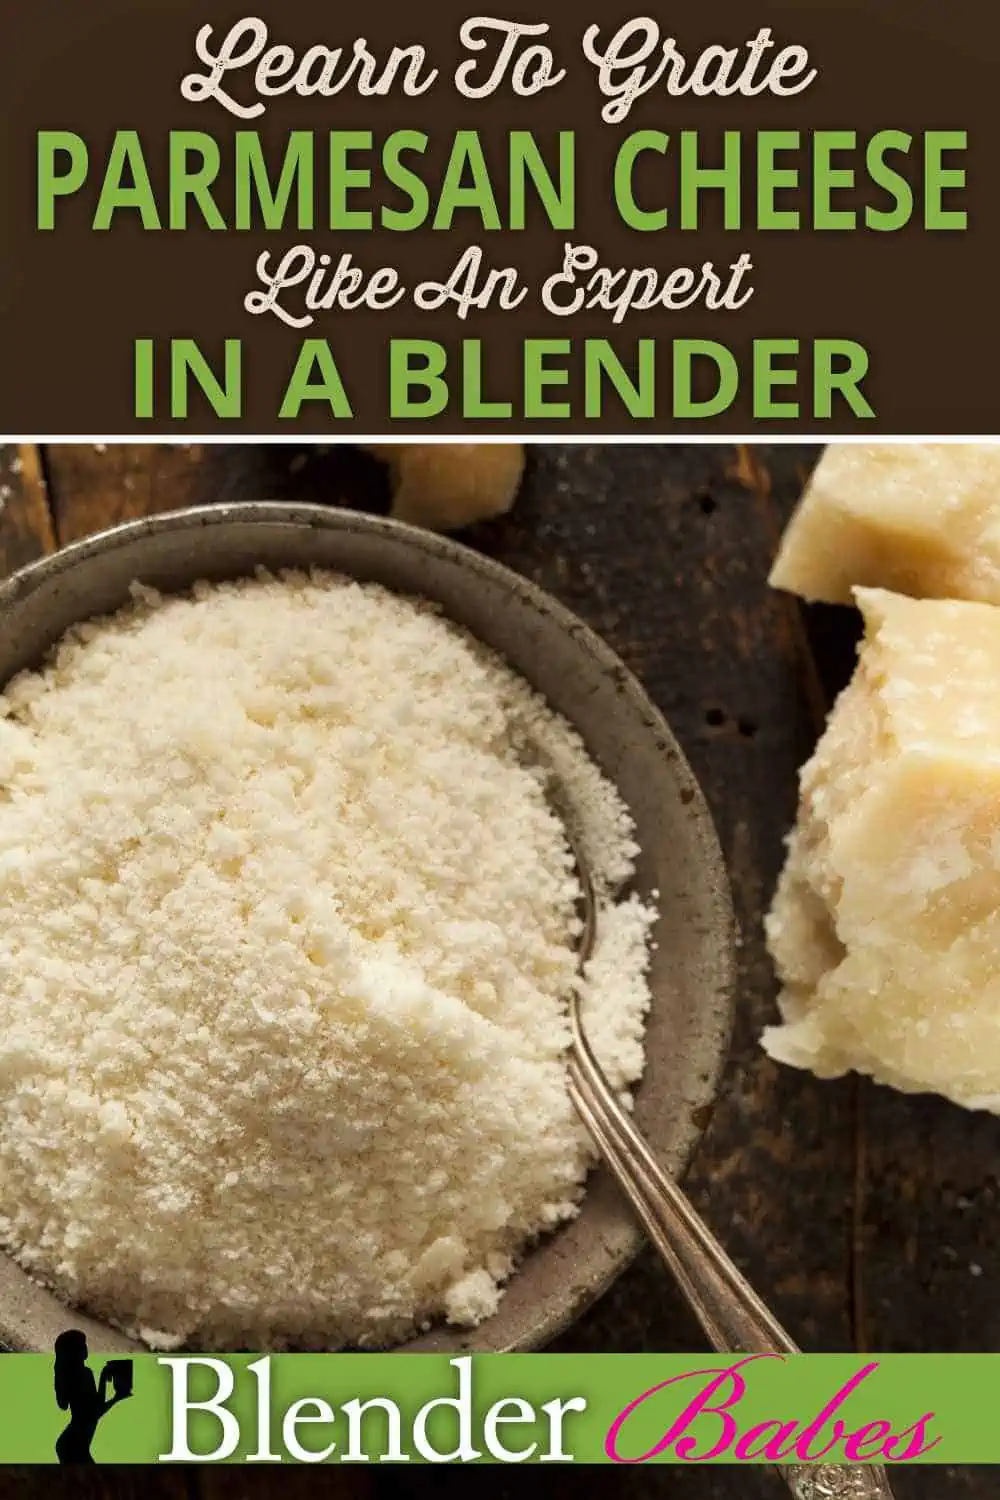 https://www.blenderbabes.com/wp-content/uploads/Grate-Parmesan-Cheese-in-a-Blender.webp